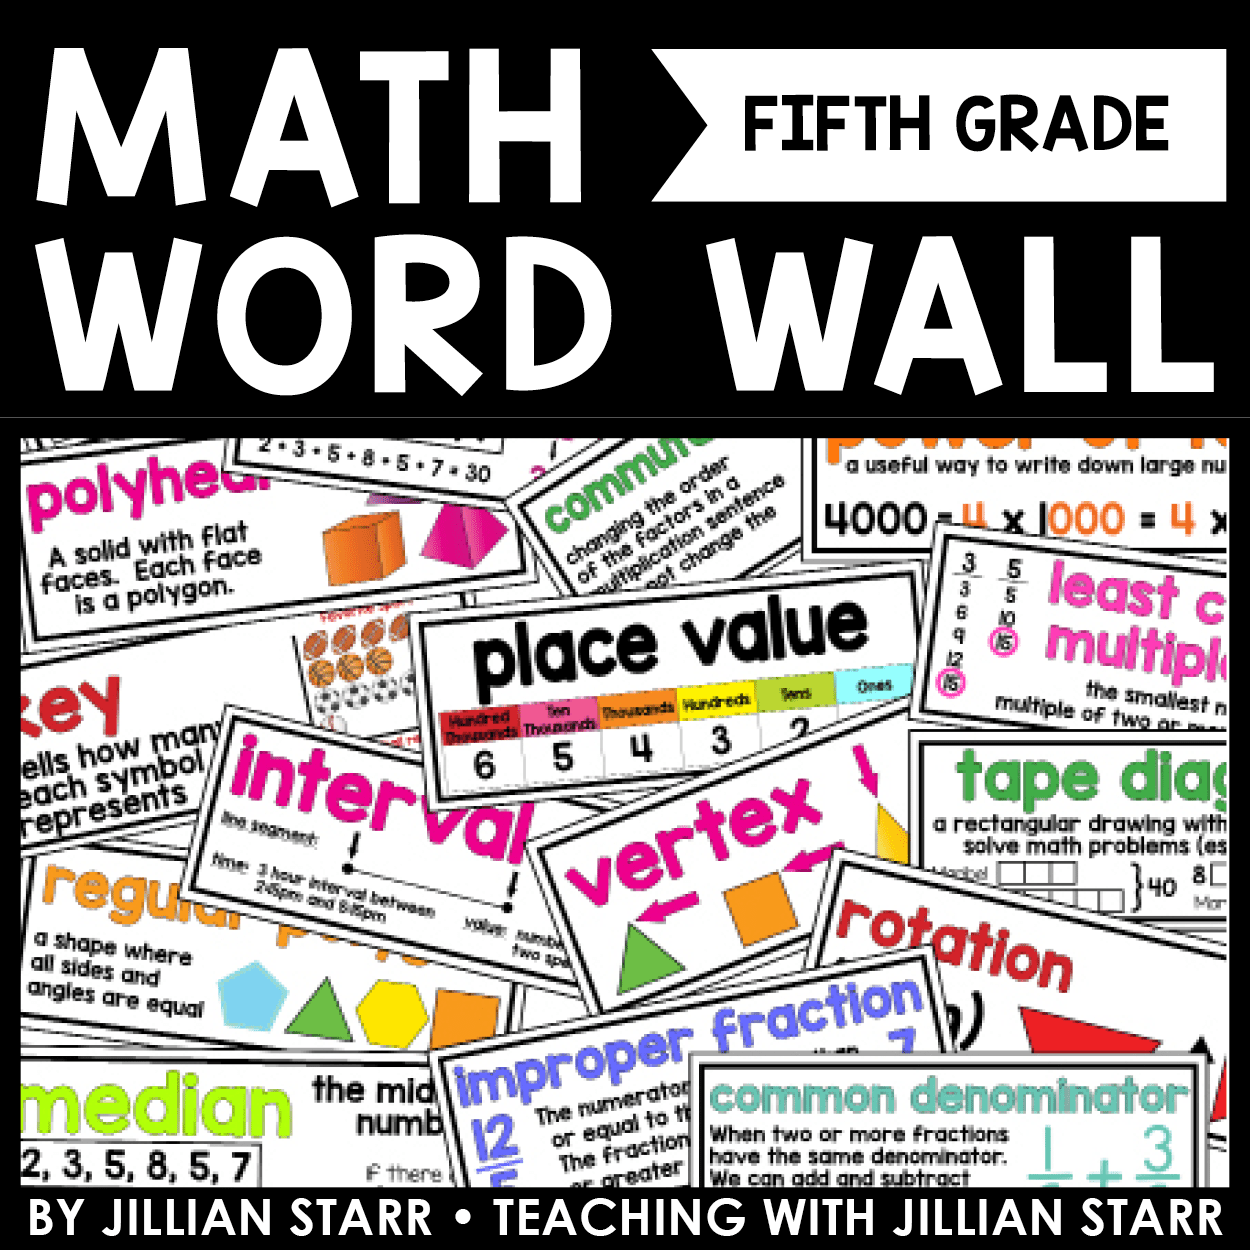 Word Wall. Vocabulary Wordwall. Grade Wall. Wordwall пример. Wordwall 5a